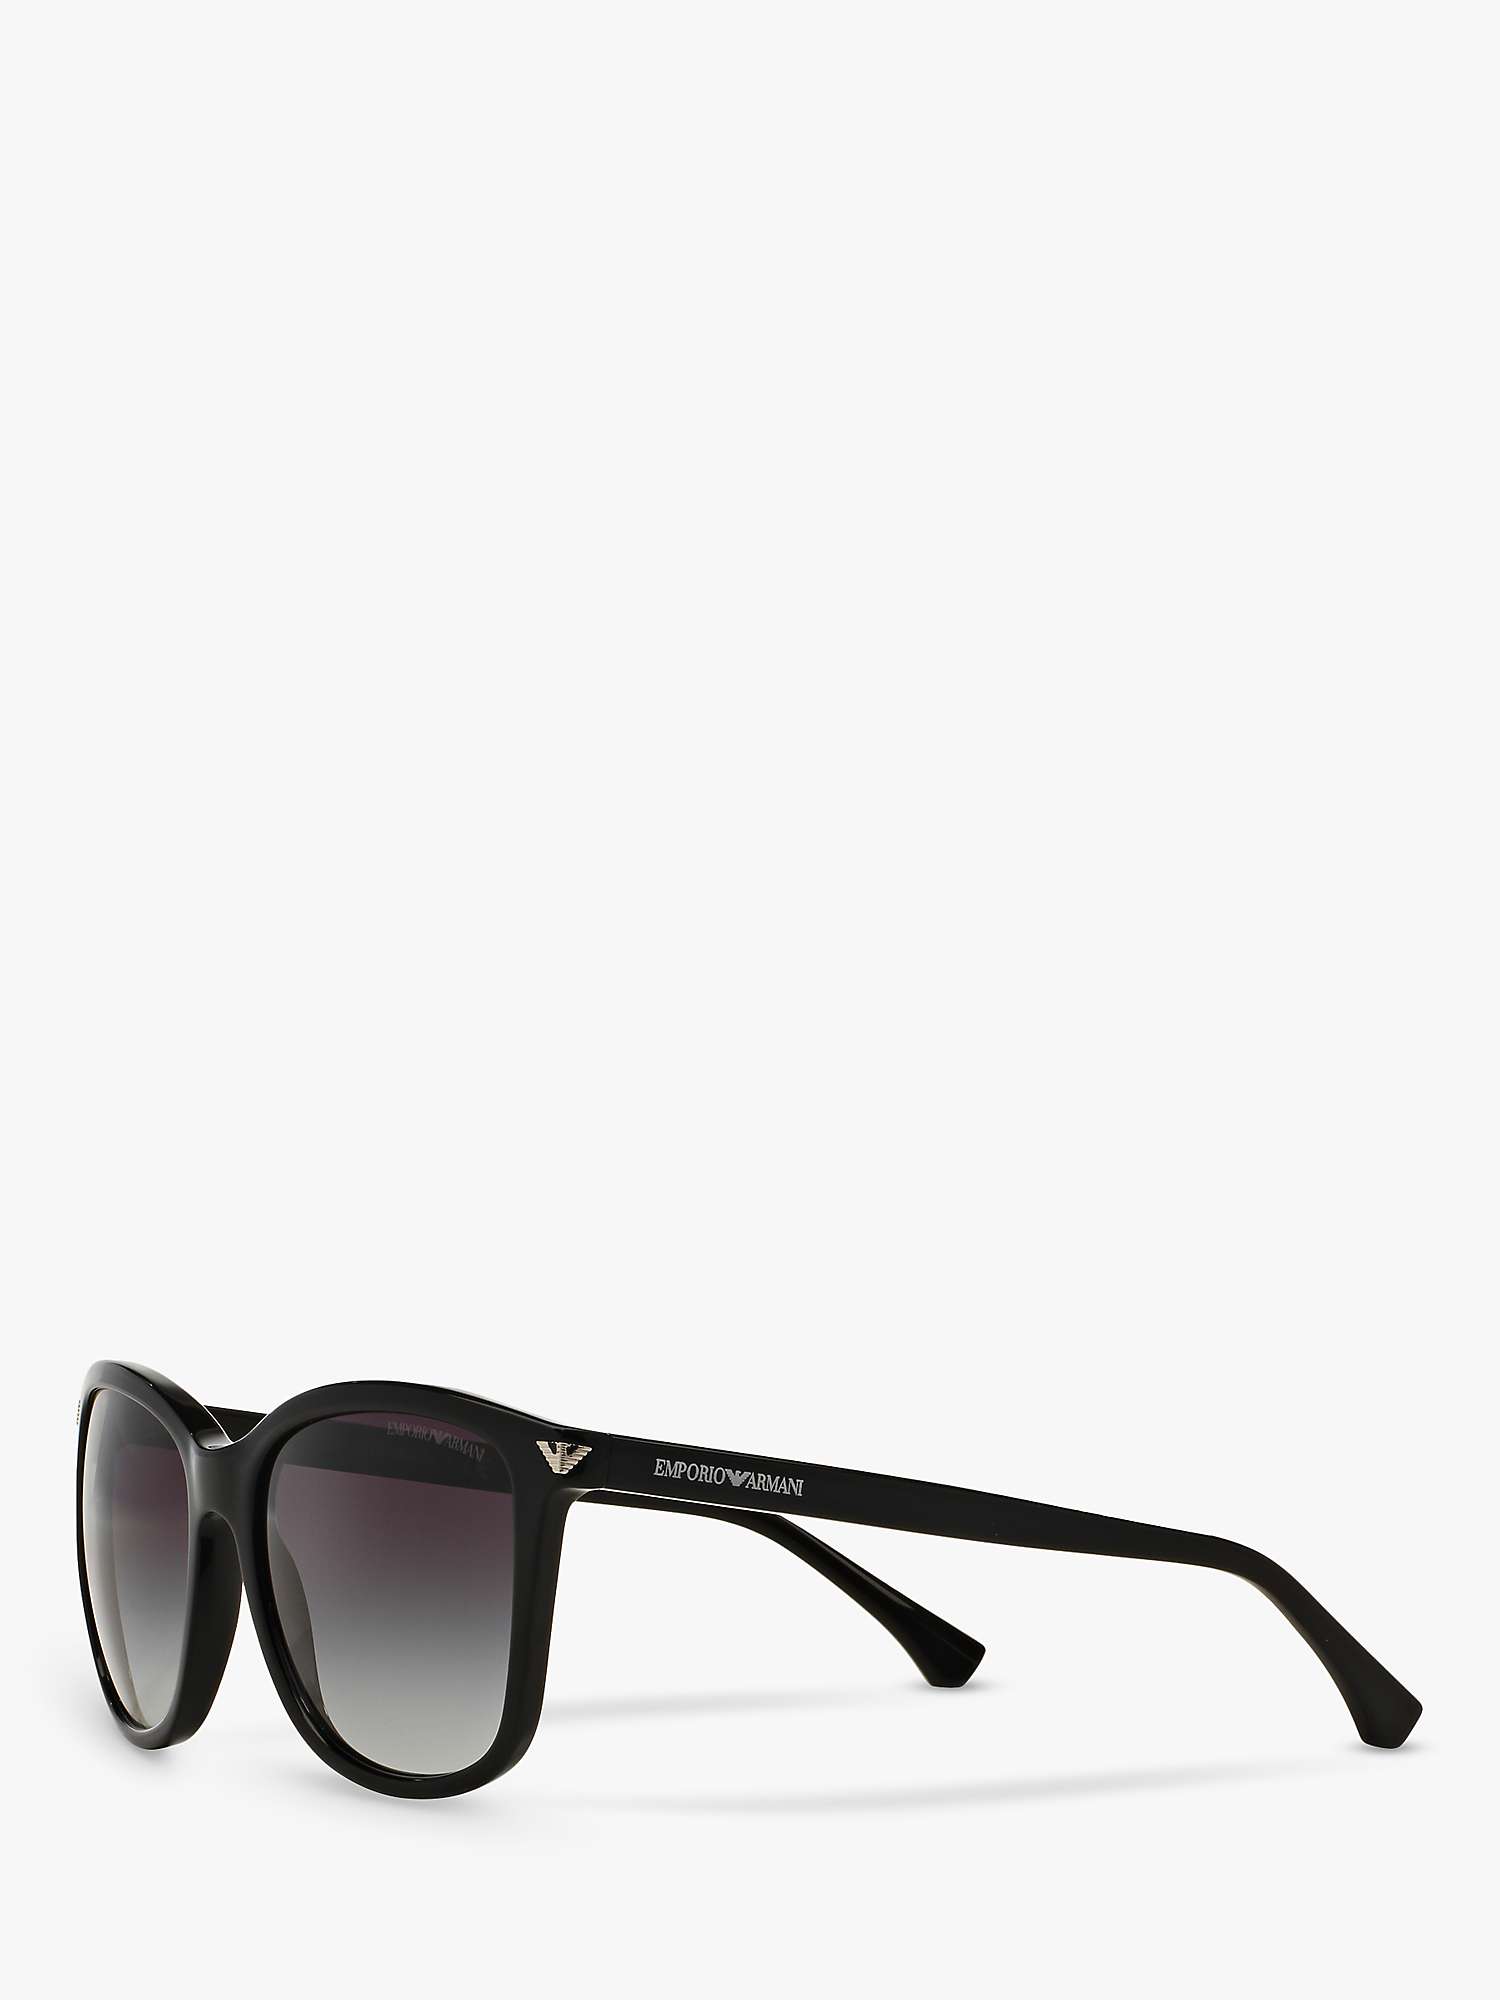 Buy Emporio Armani EA4060 Women's Square Sunglasses, Black/Grey Gradient Online at johnlewis.com